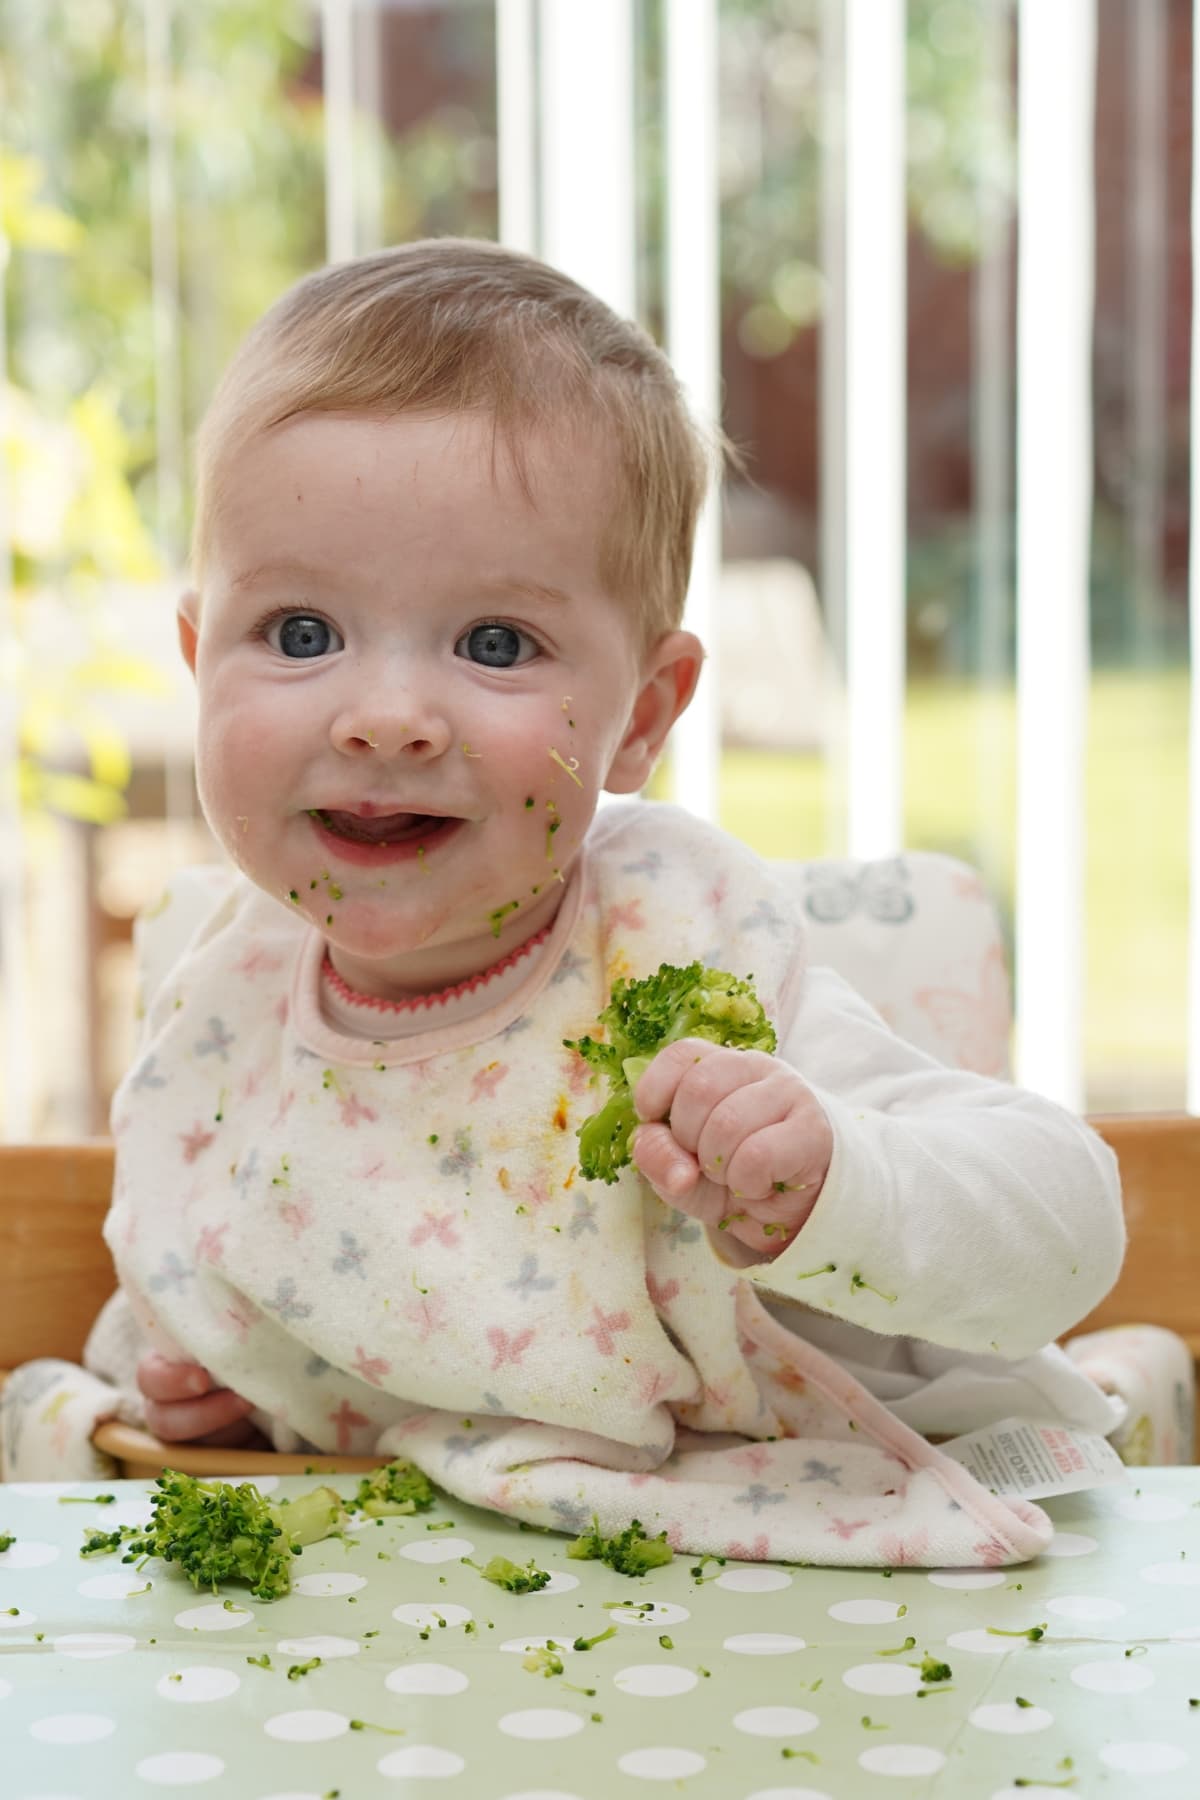 baby girl in bib holding broccoli with palmar grasp.